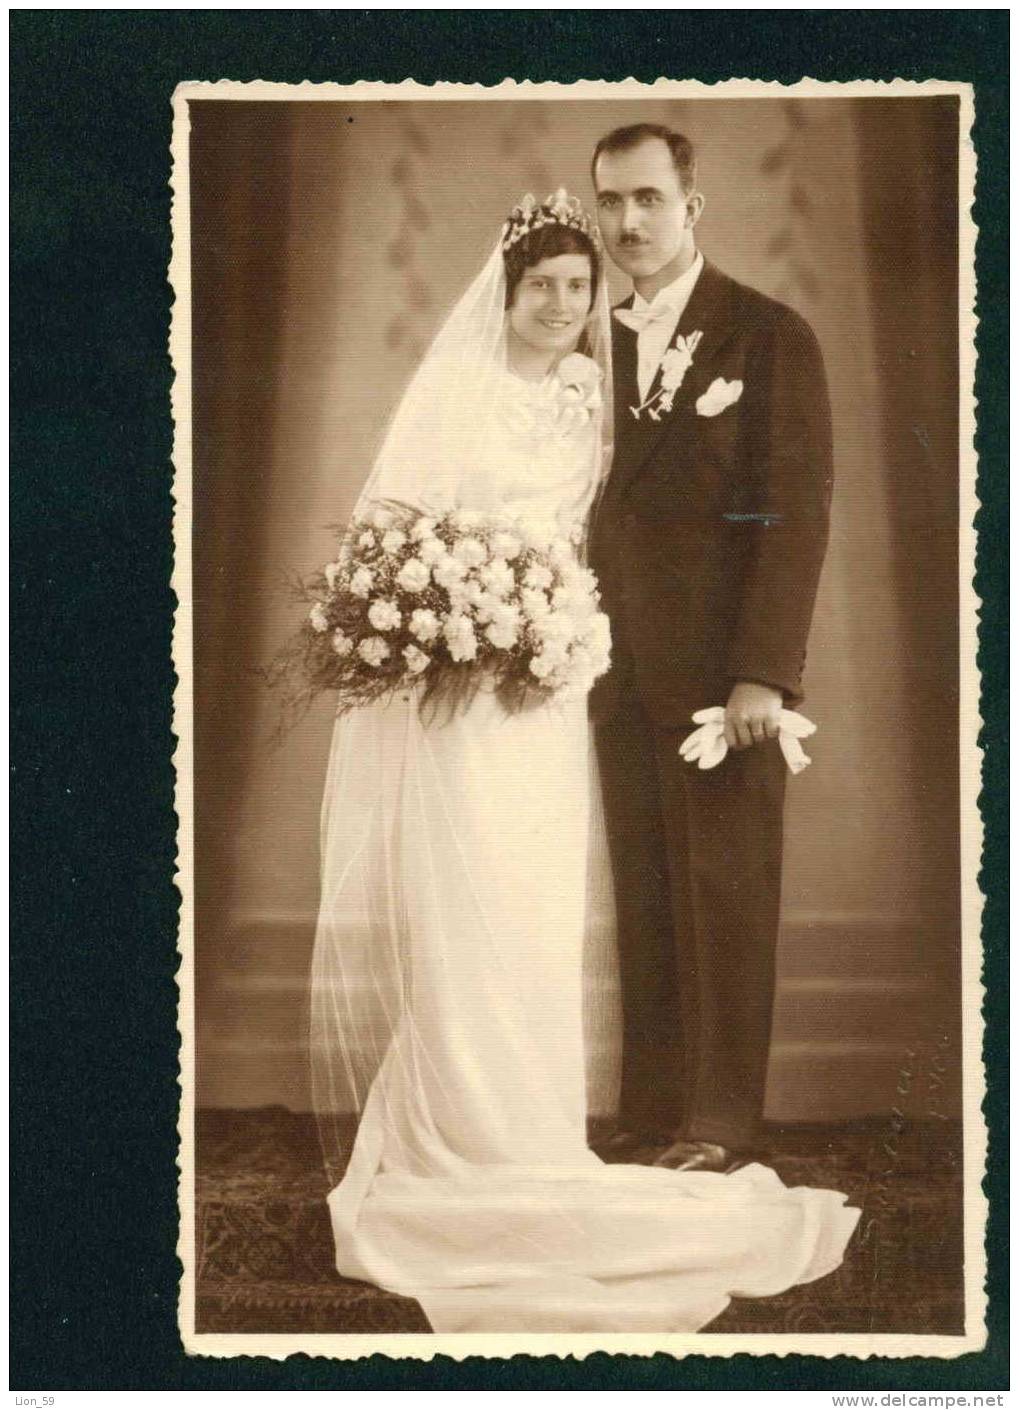 D3070 / Marriages  WEDDING , BRIDE W BRIDEGROOM Bulgaria 1930s Vintage REAL Photo PHOTOGRAPHER "SALASH" - ROUSSE - Nozze